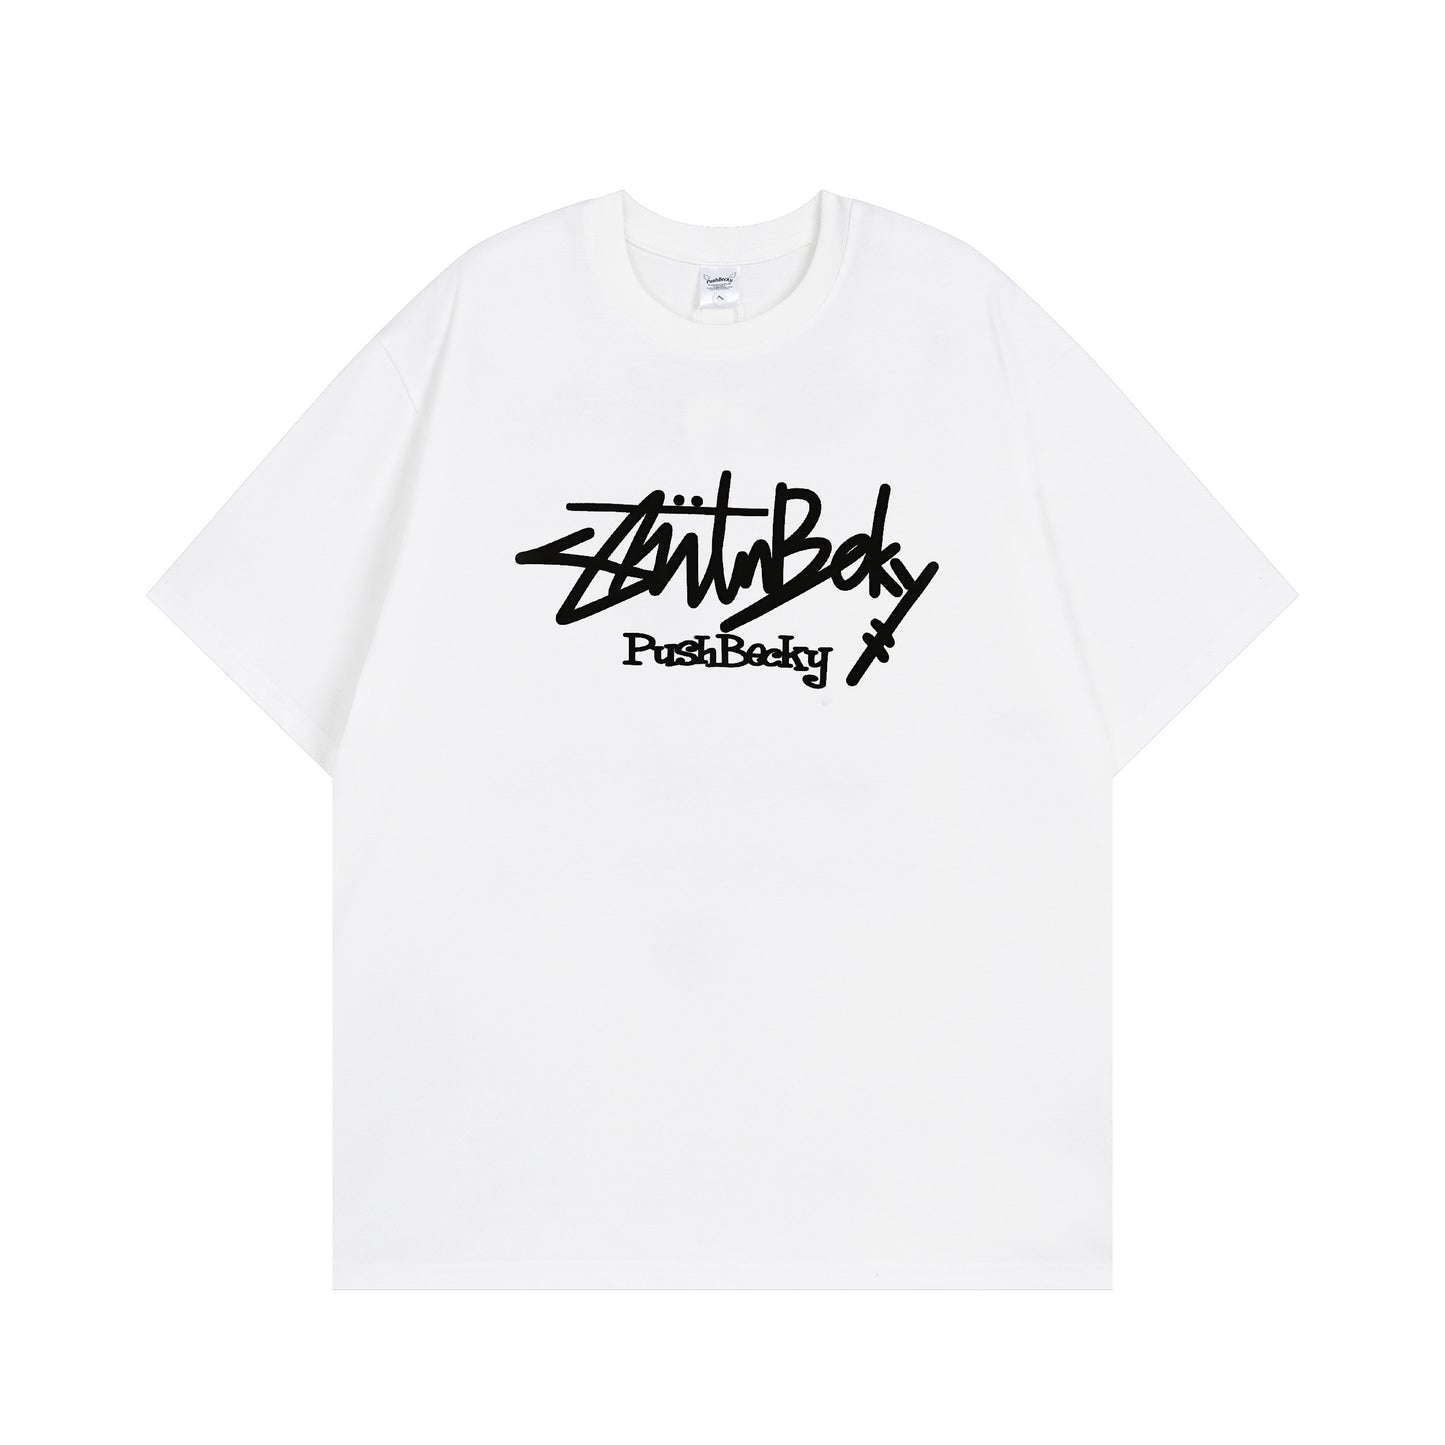 Hellokitty Scrawl Cute Short Sleeve Tee Casual Summer T Shirt Top